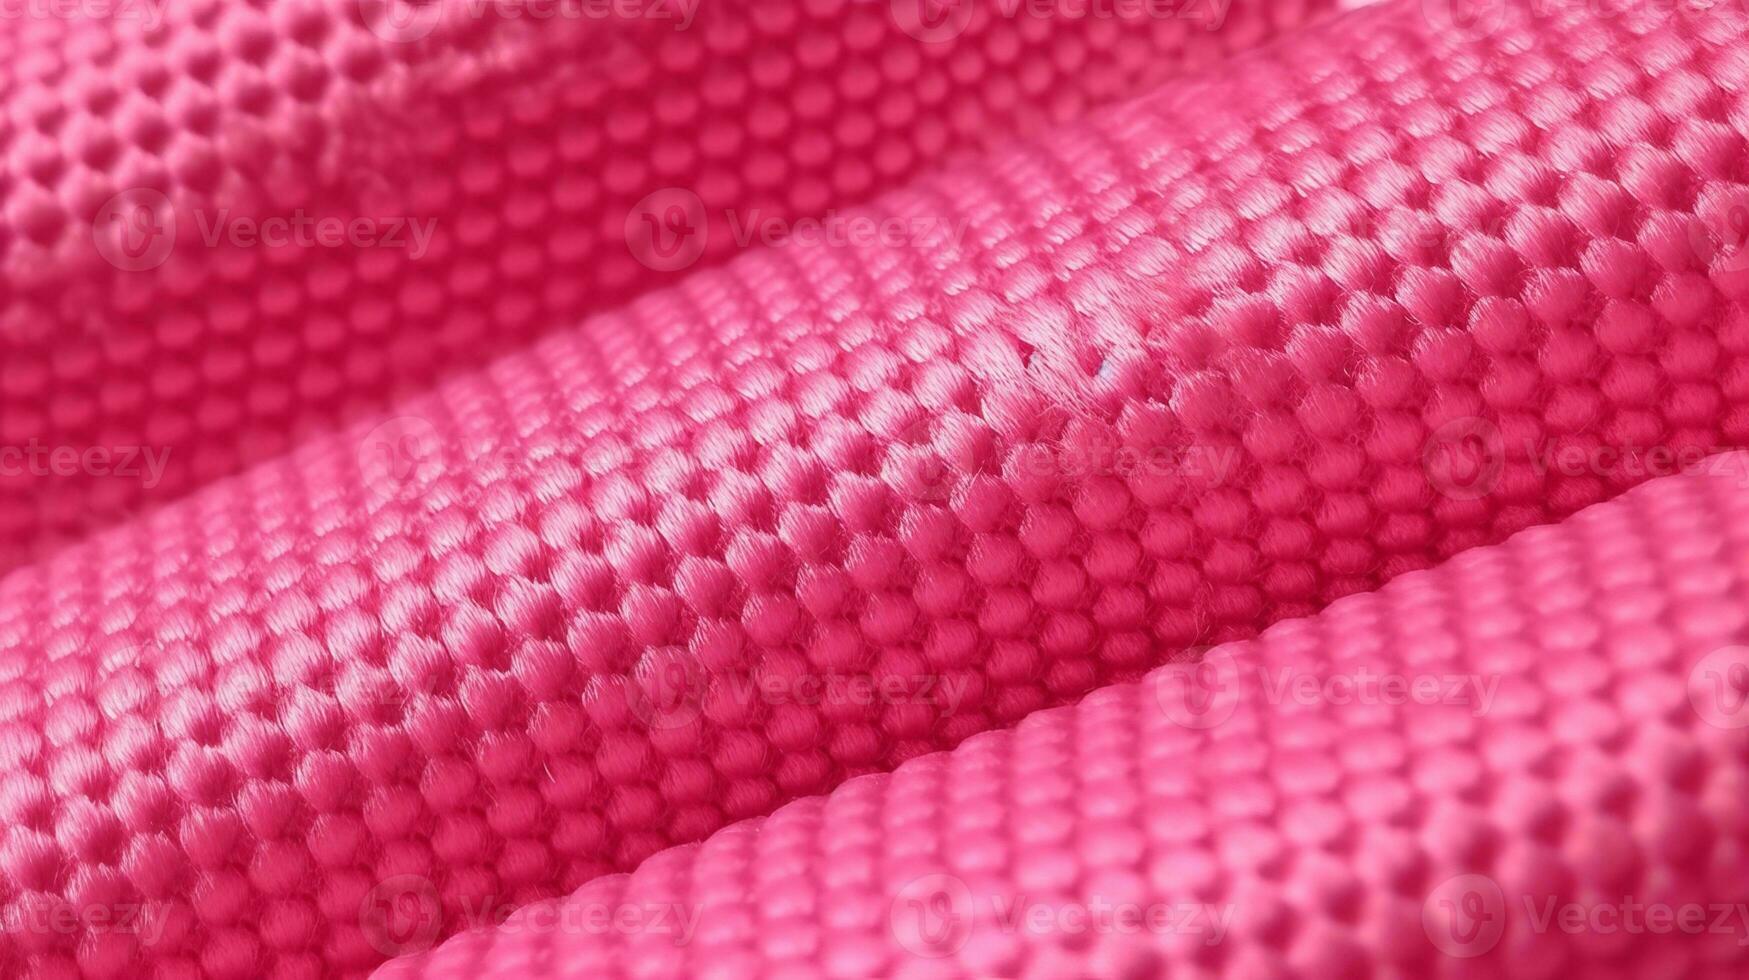 rosado fútbol tela textura con aire malla. ropa de deporte antecedentes foto